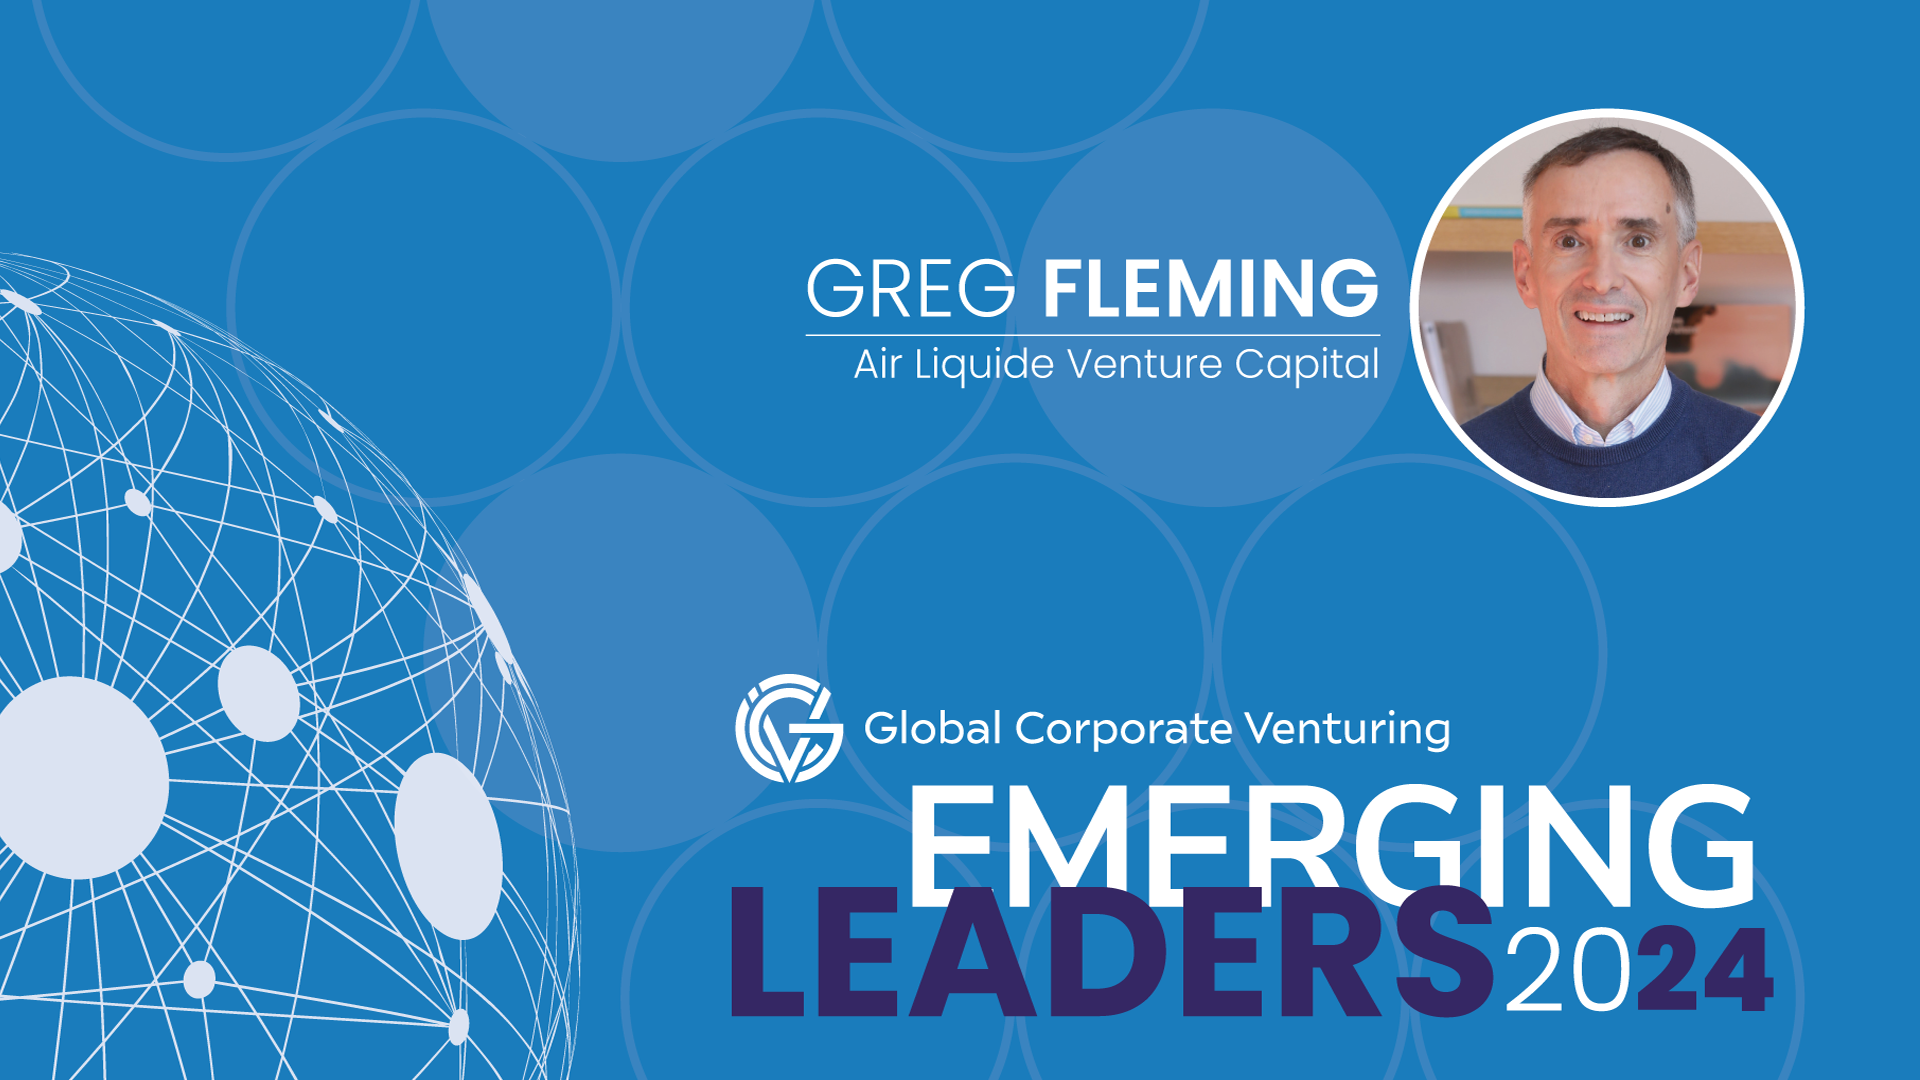 Greg Fleming, Air Liquide Venture Capital